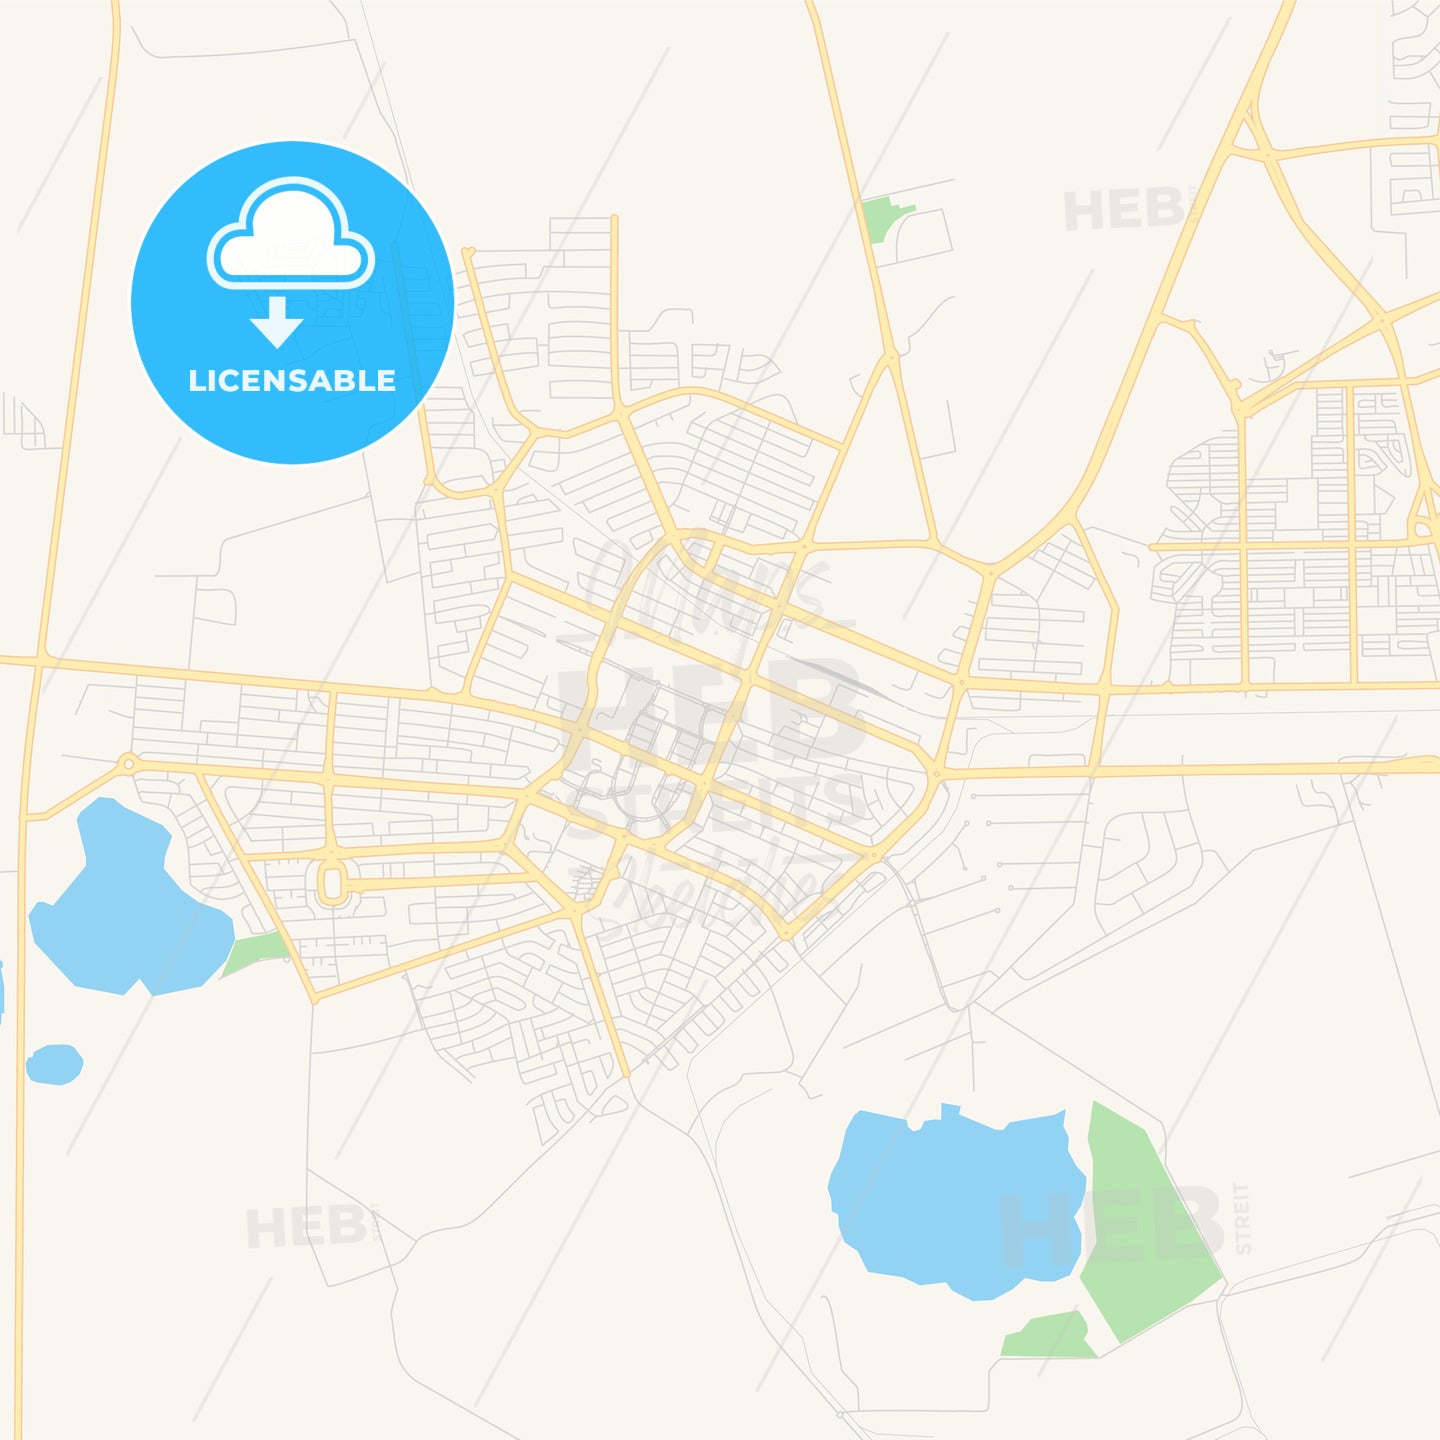 Printable street map of Welkom, South Africa